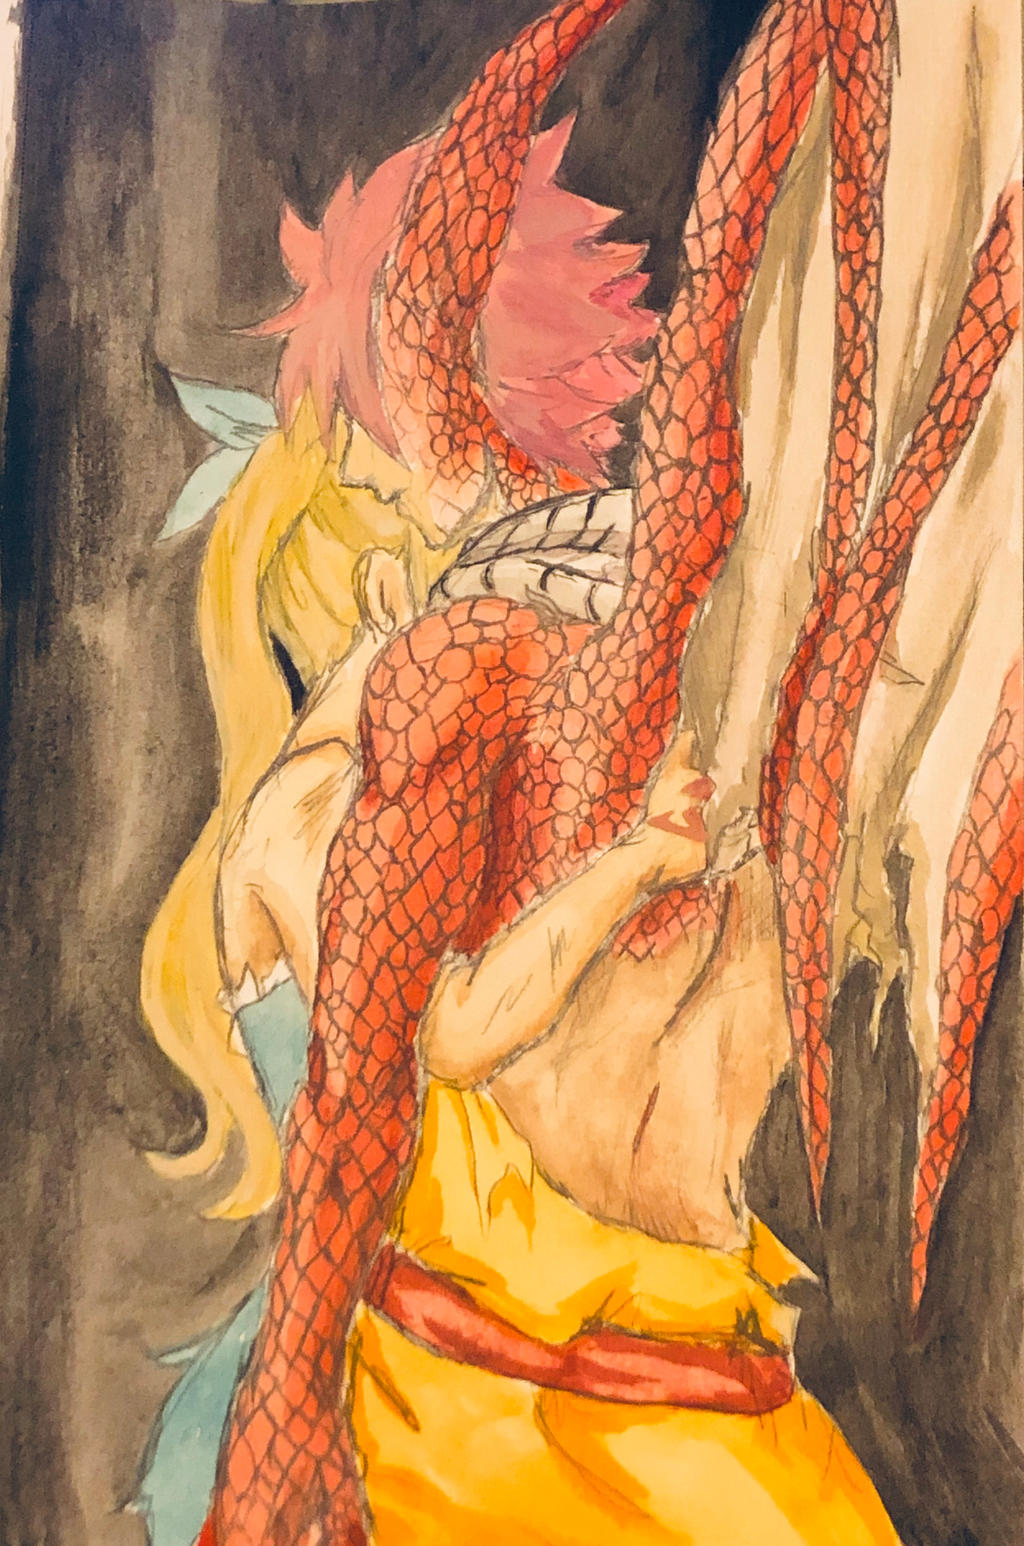 Dragon cry natsu and lucy by Joshdinobarney on DeviantArt